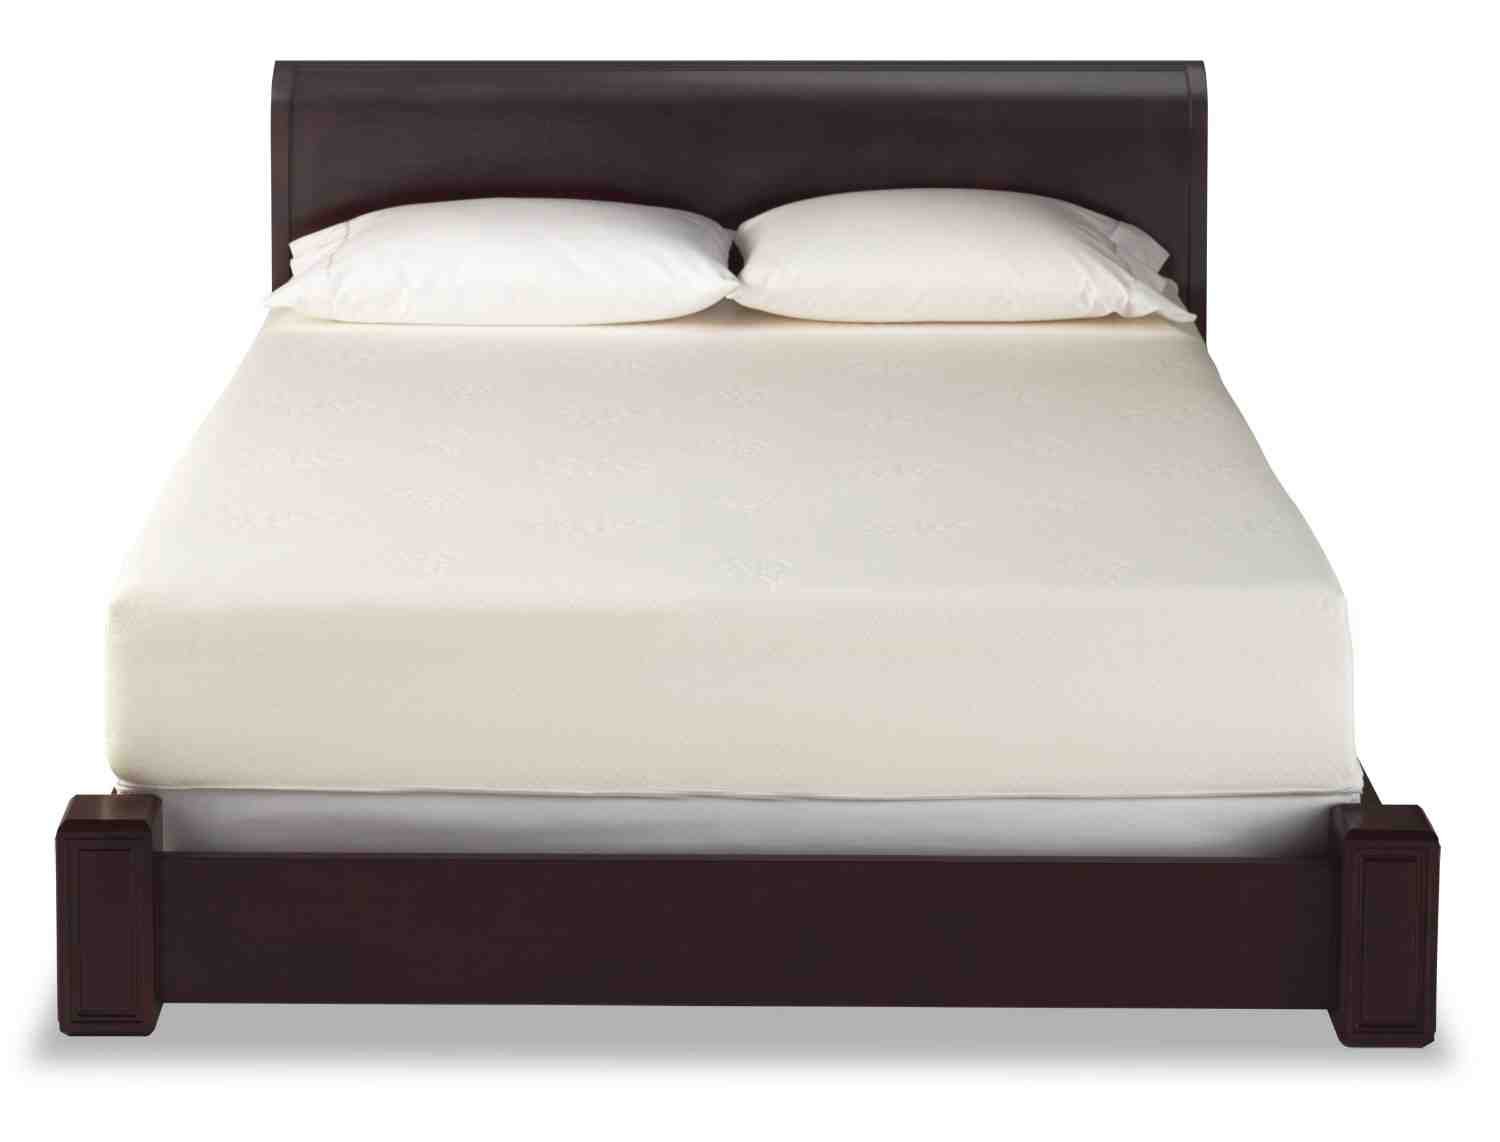 memory foam mattress for sale in leicester gumtree